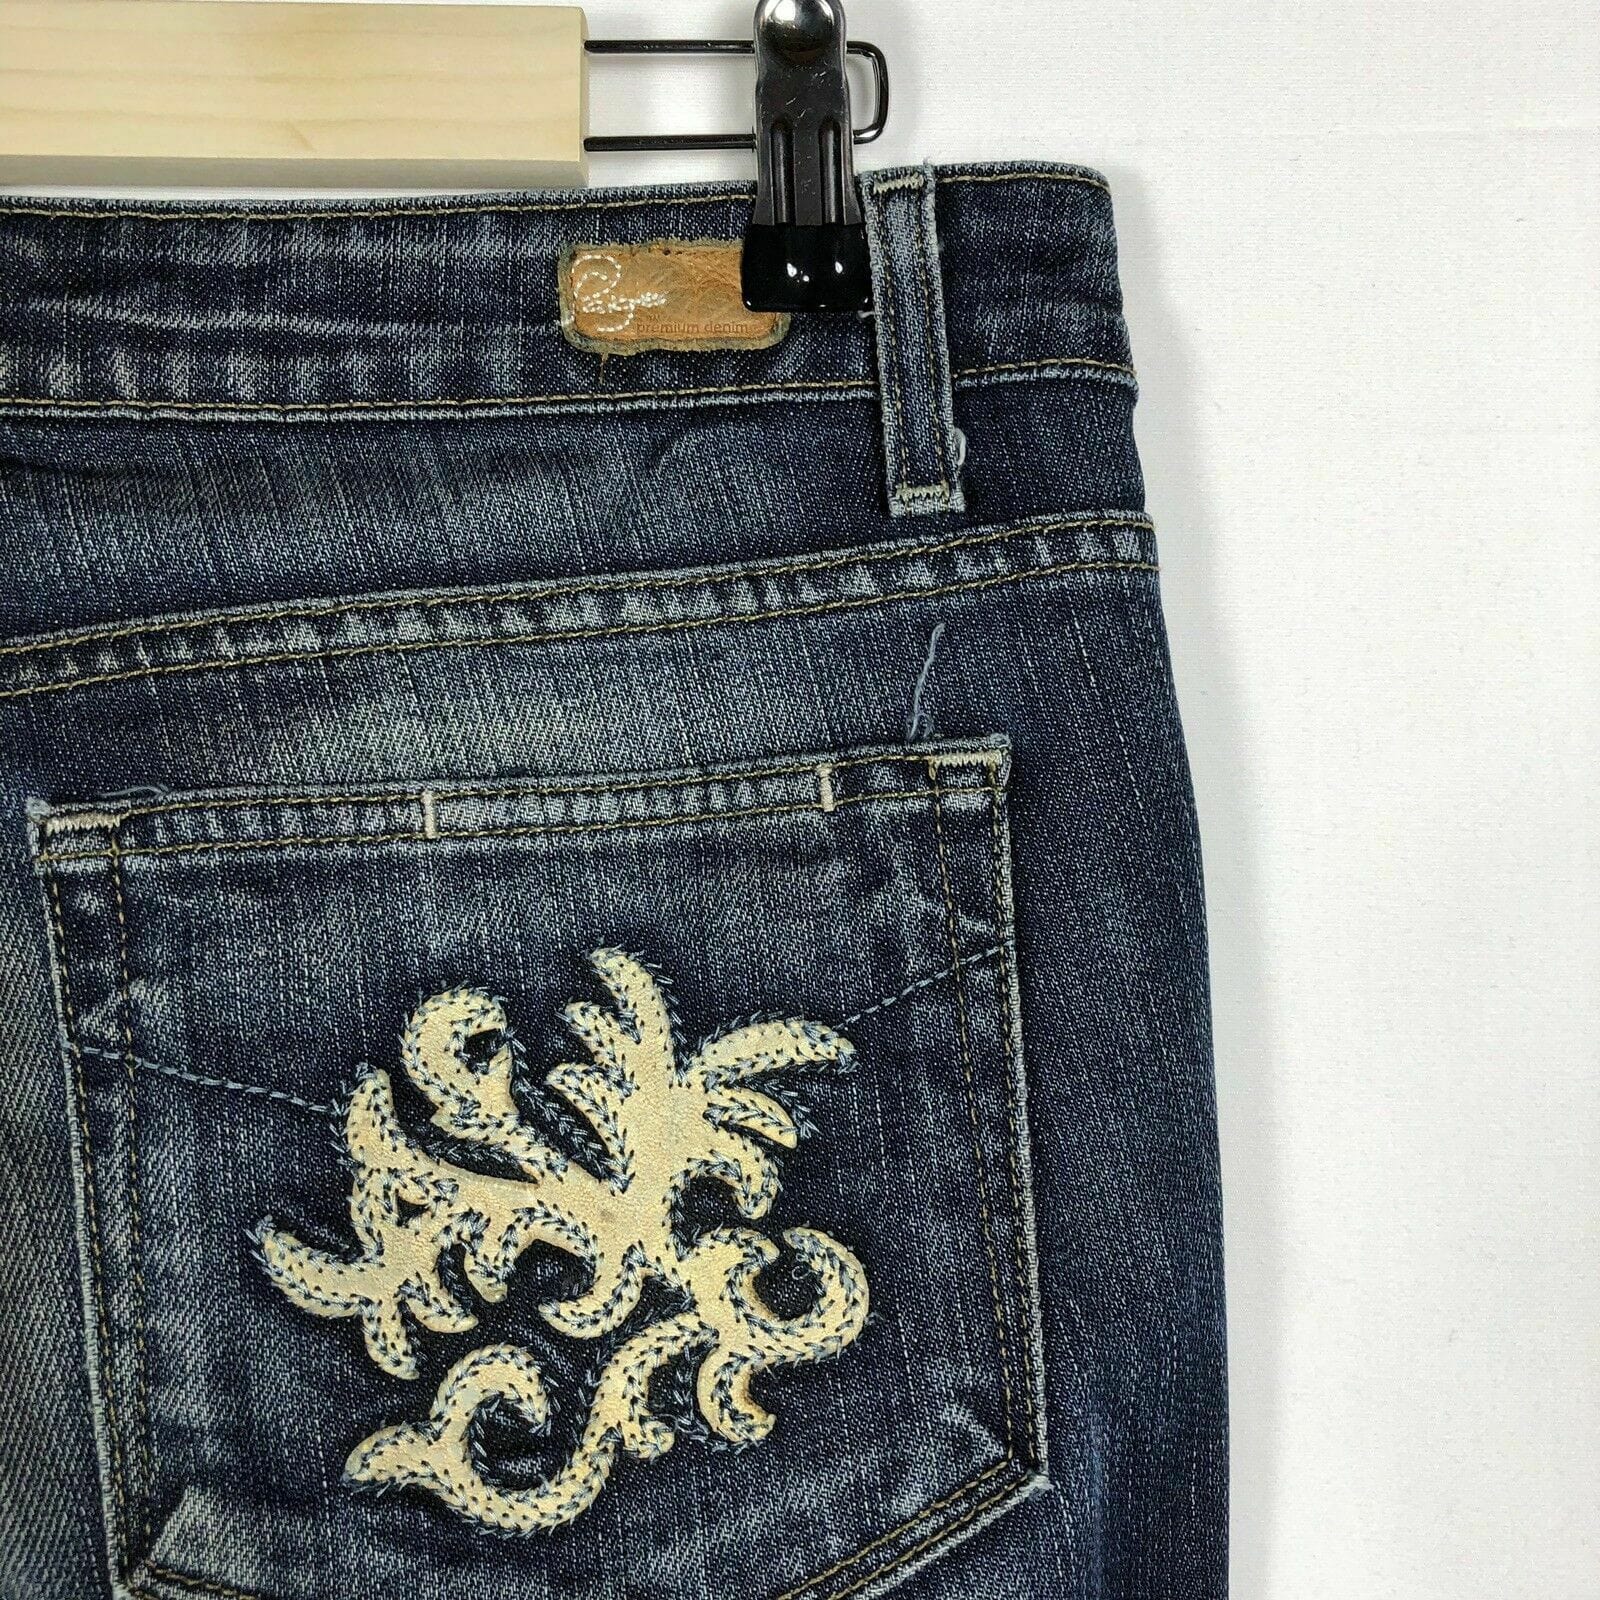 Designer Jeans for Women - Denim Jeans in Chic Styles - Lulus | Denim  design, Women denim jeans, Women jeans